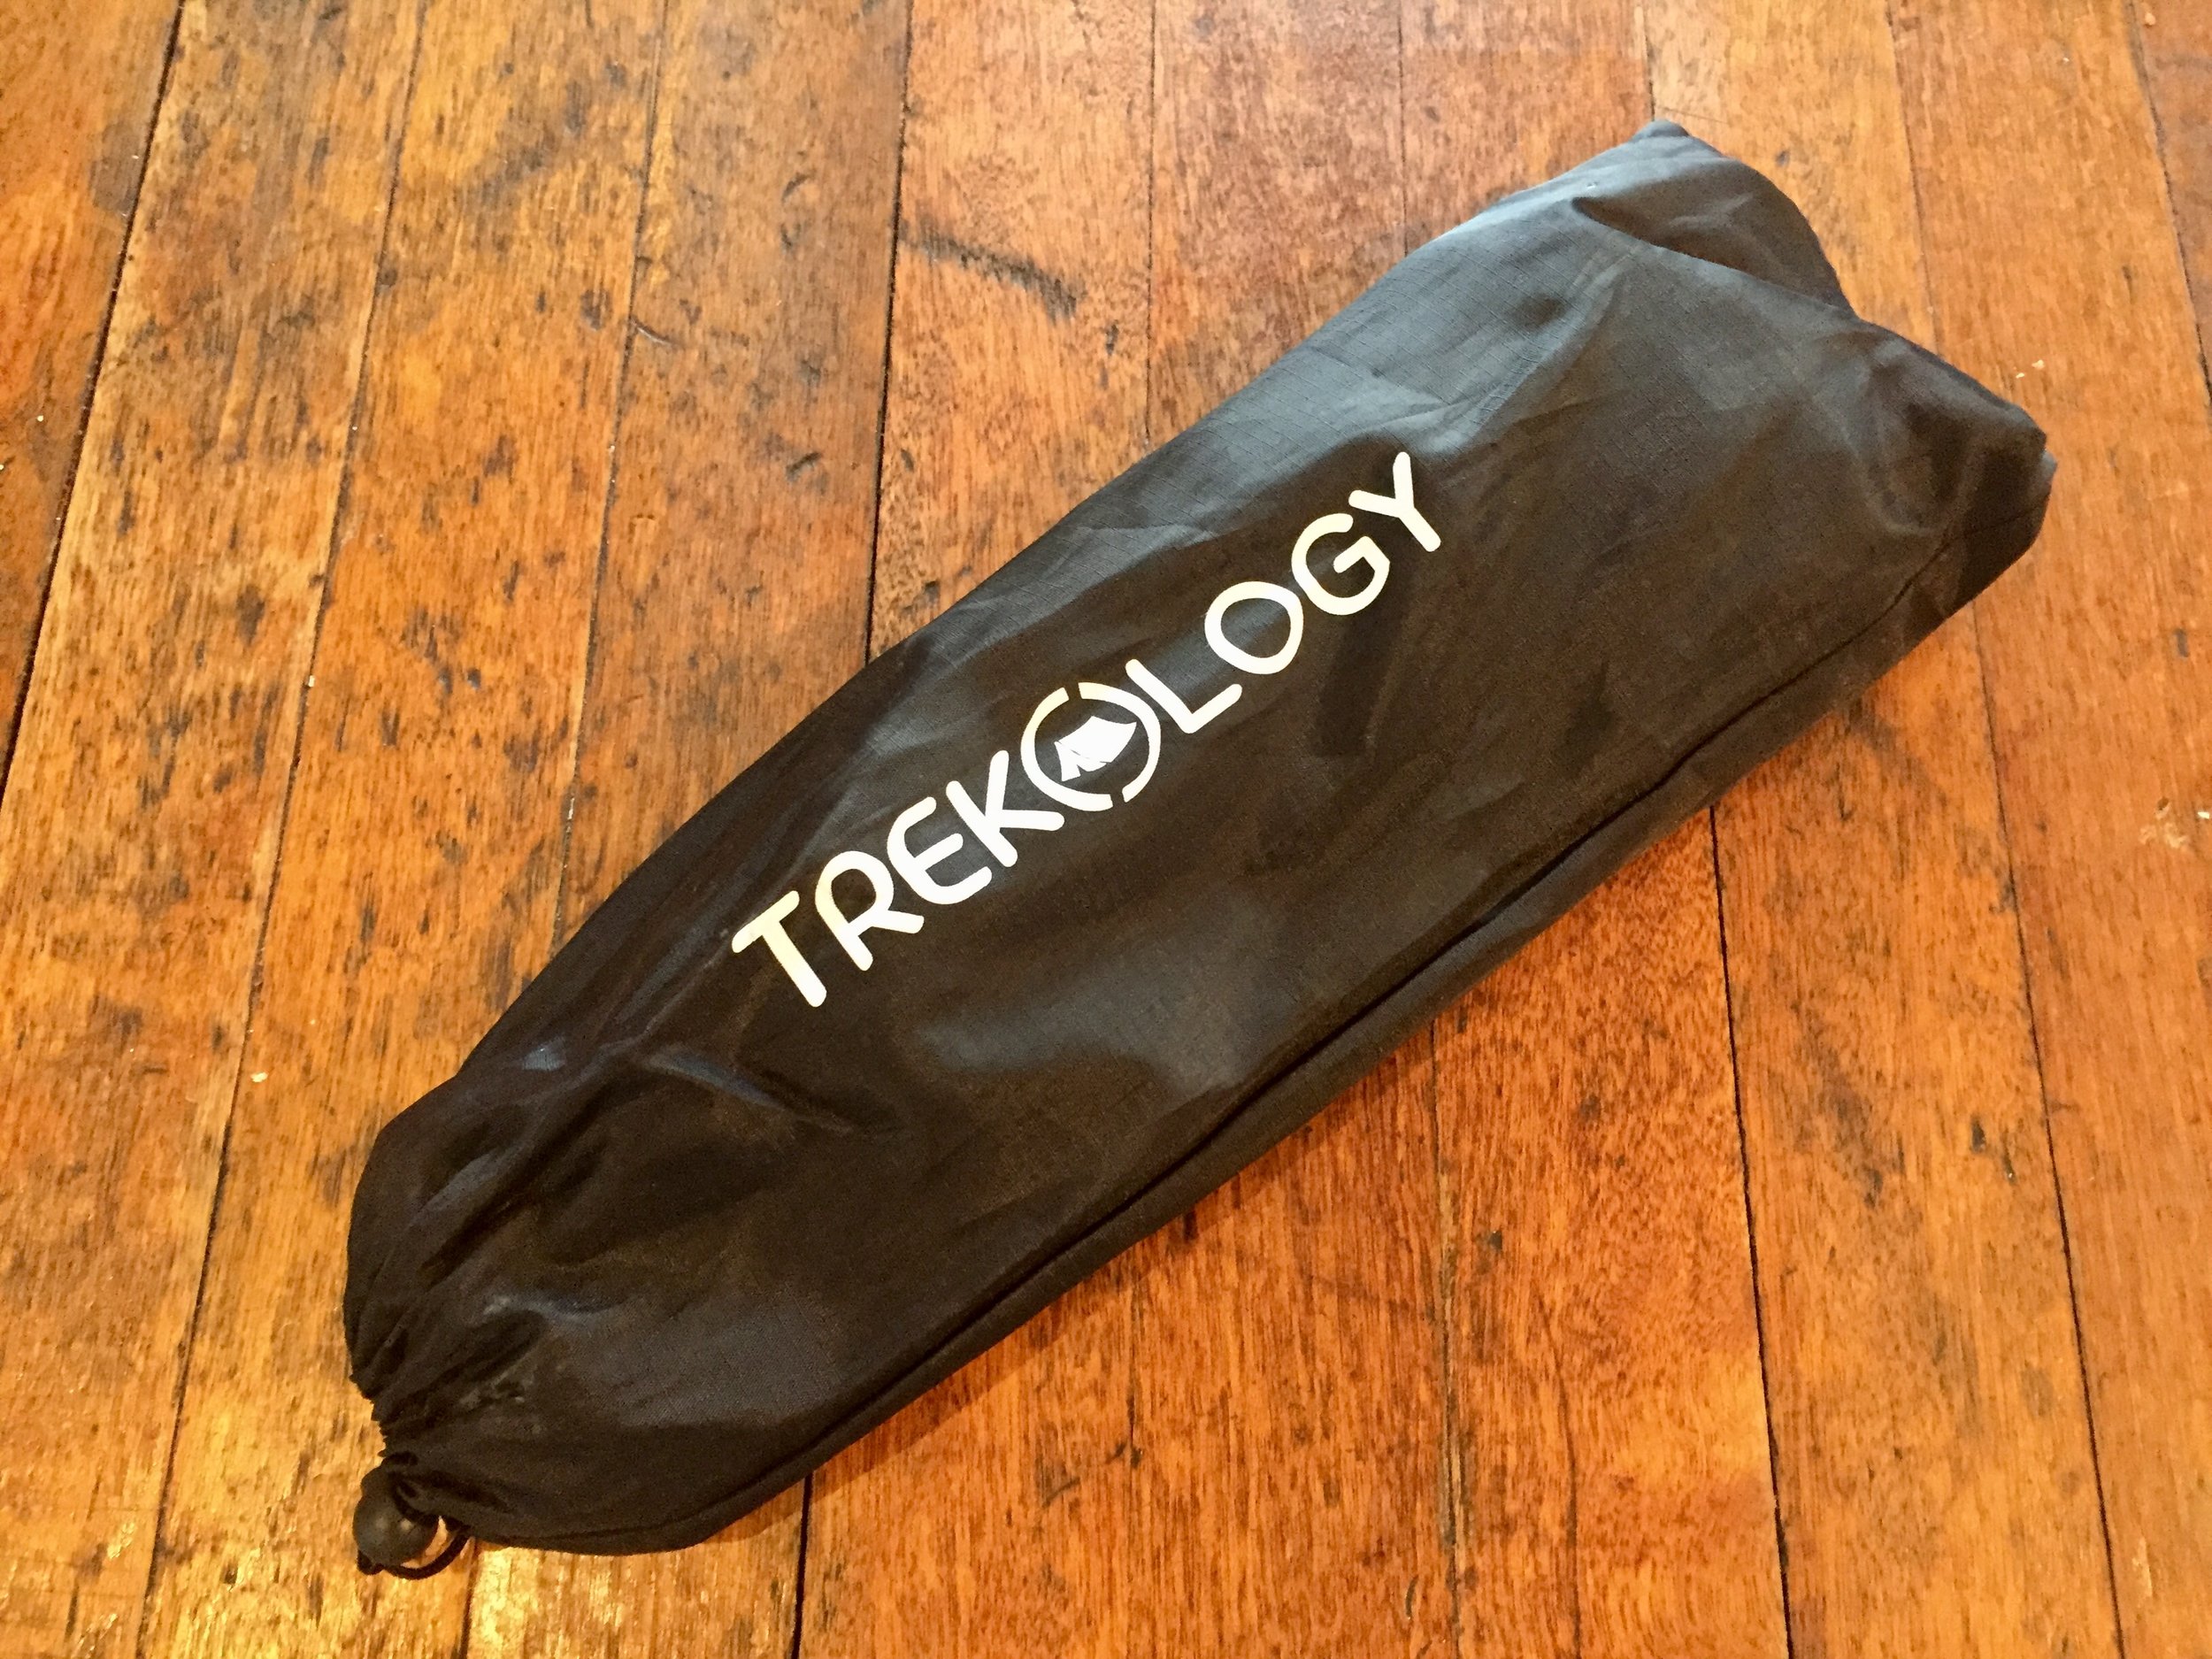 Trekology hiking poles in carry bag